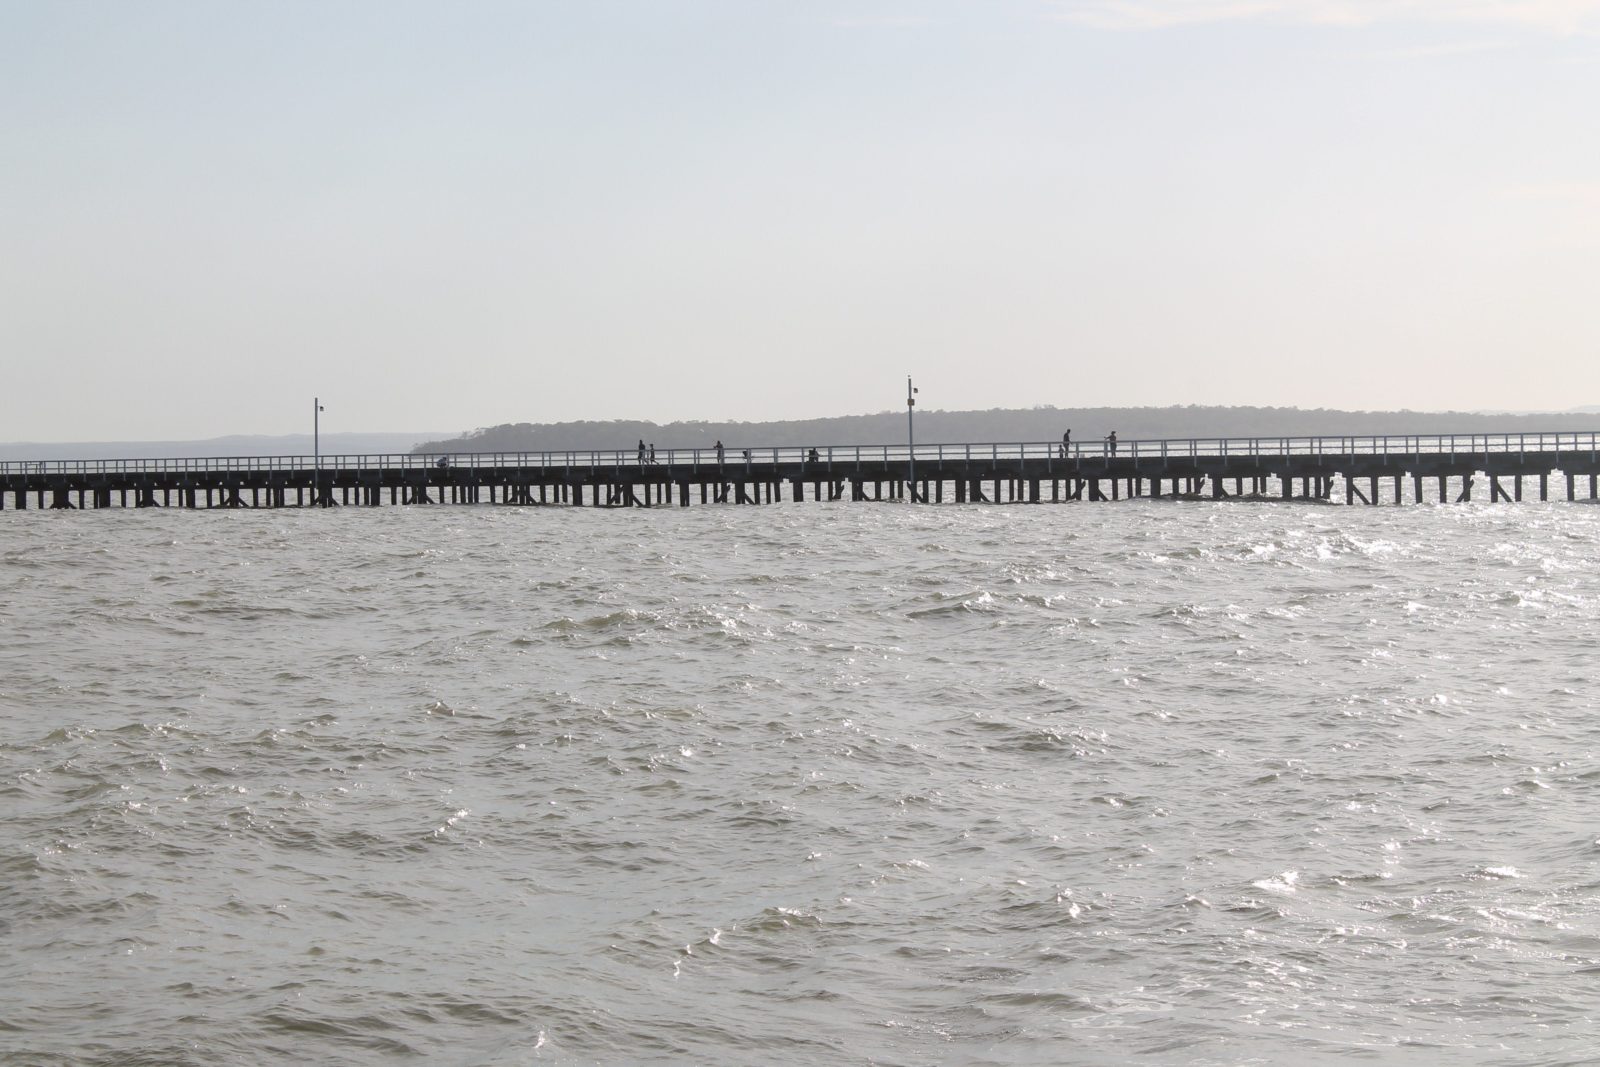 Summer or winter, the pier is always a great walking spot